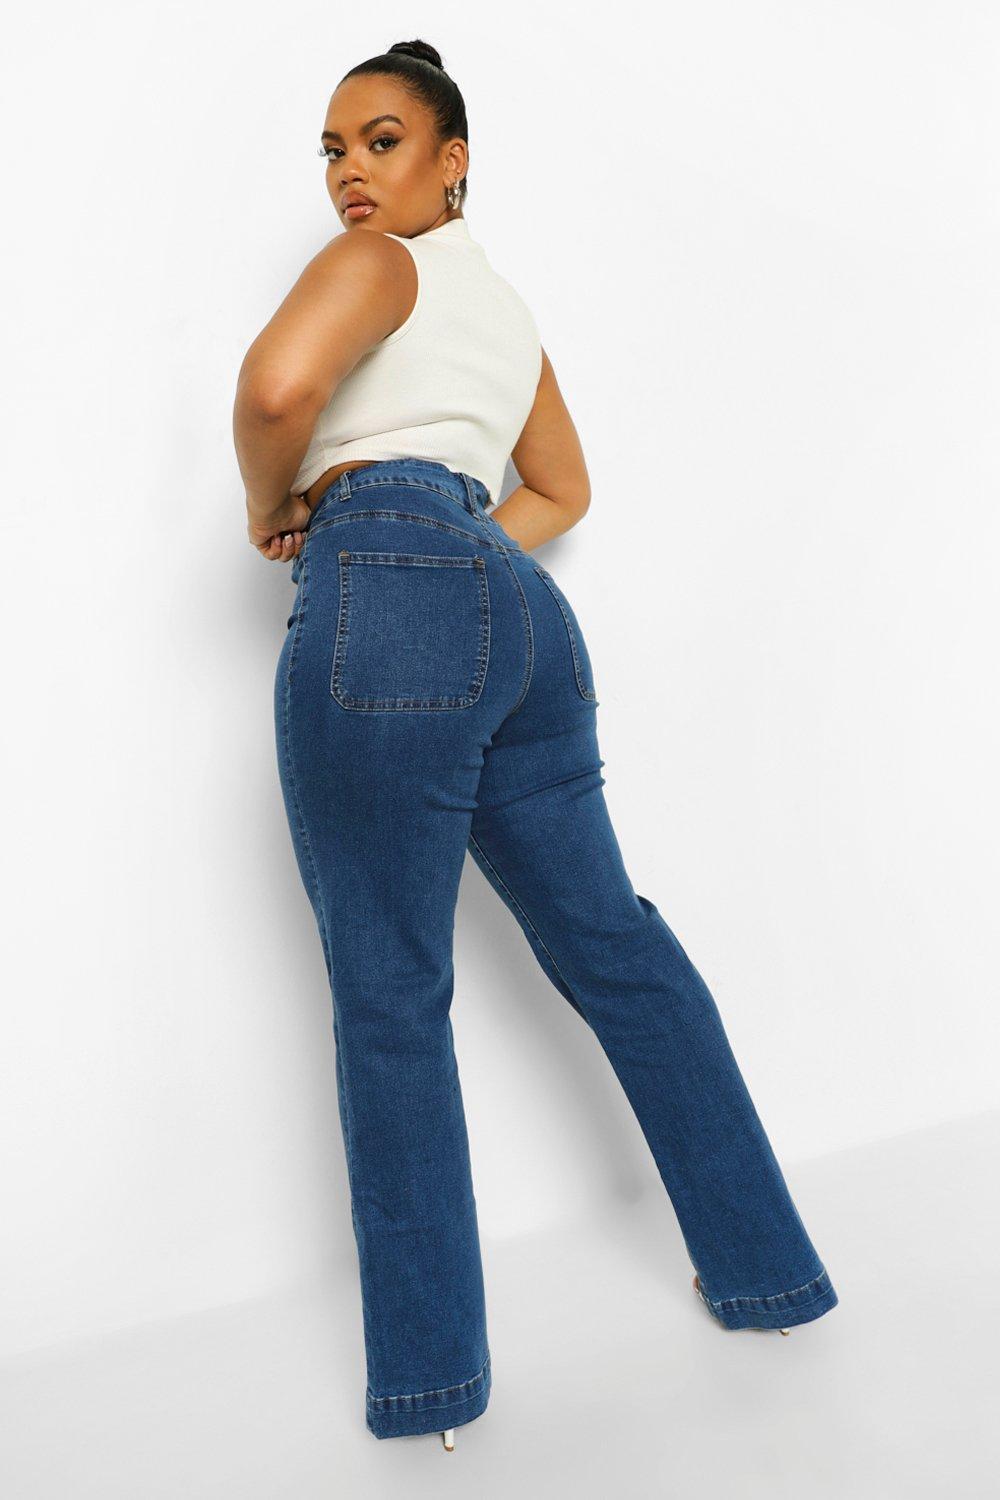 Basic High Rise Flared Jeans